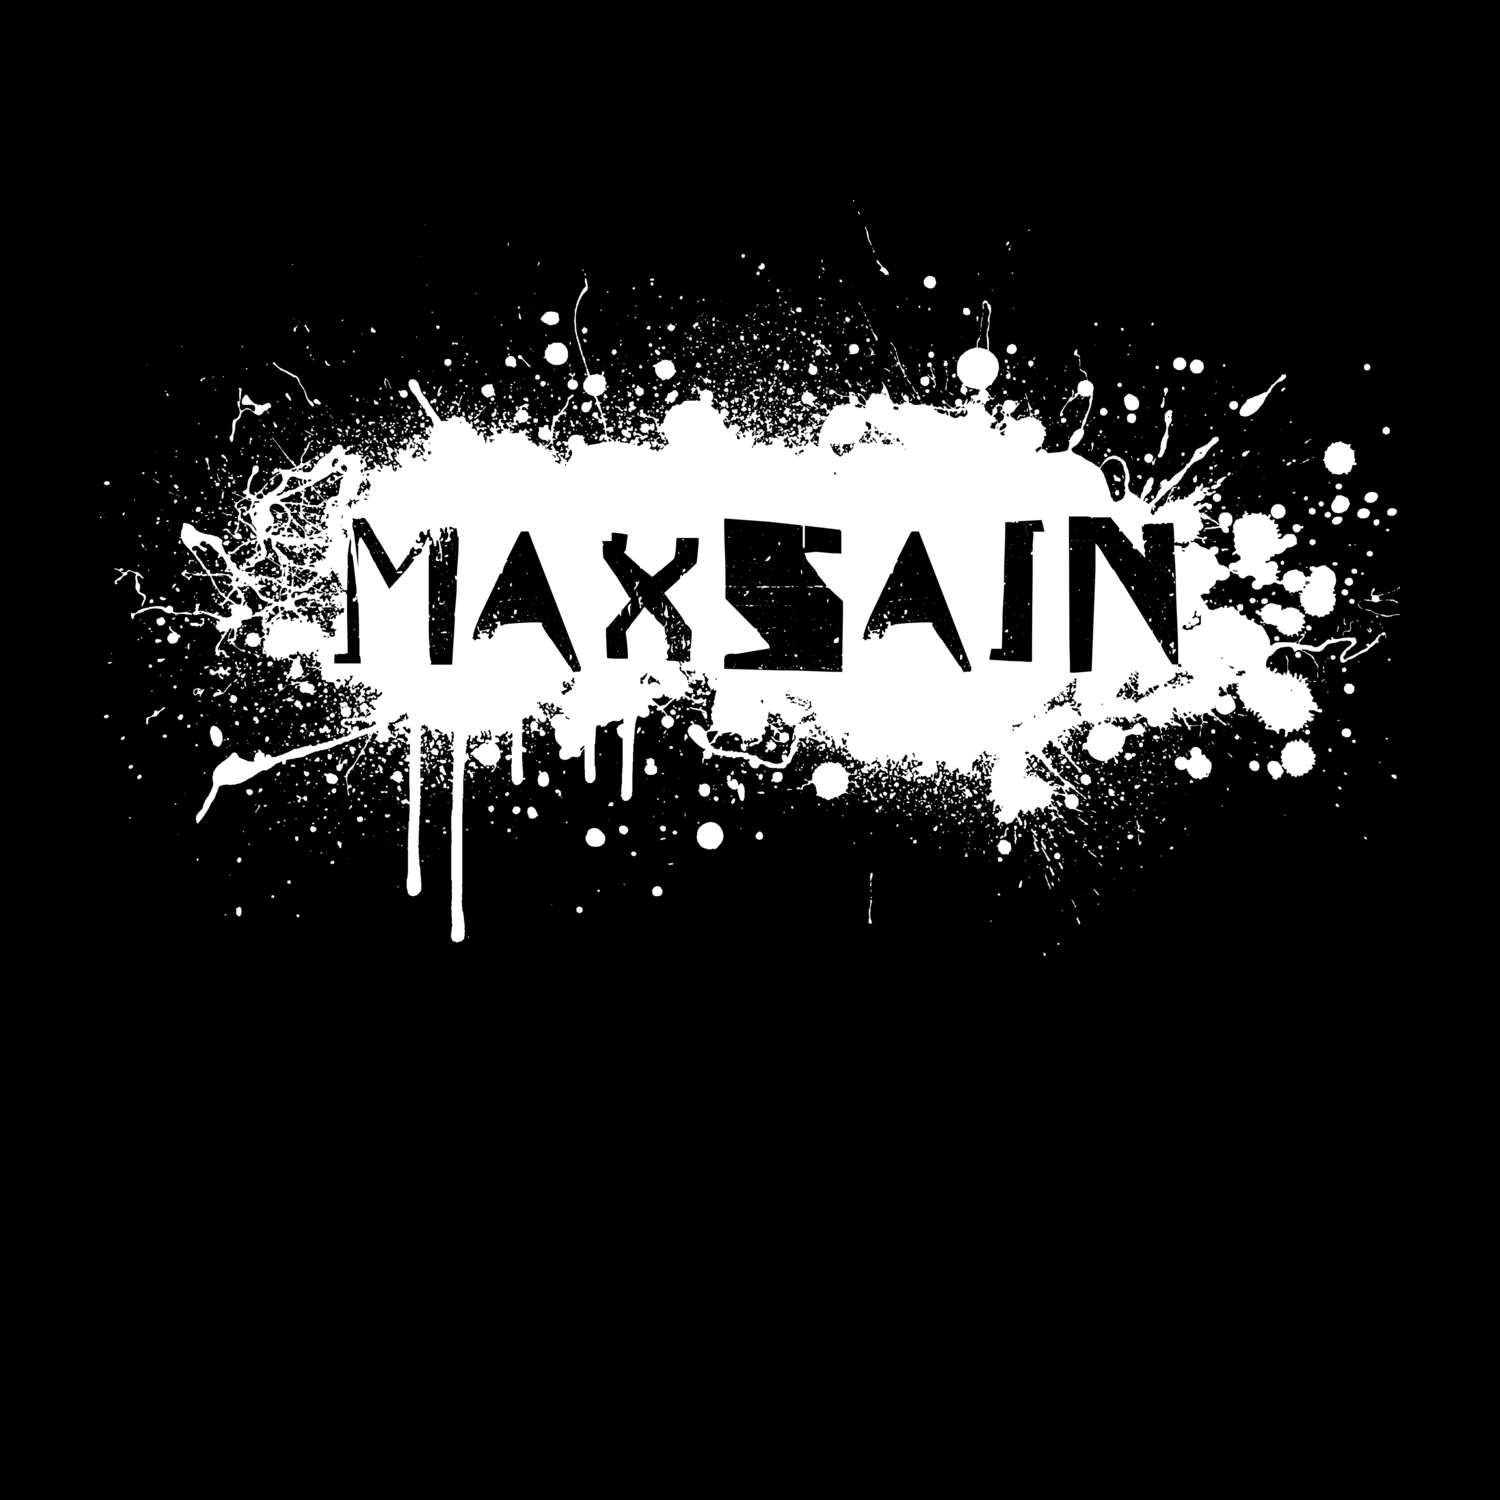 Maxsain T-Shirt »Paint Splash Punk«